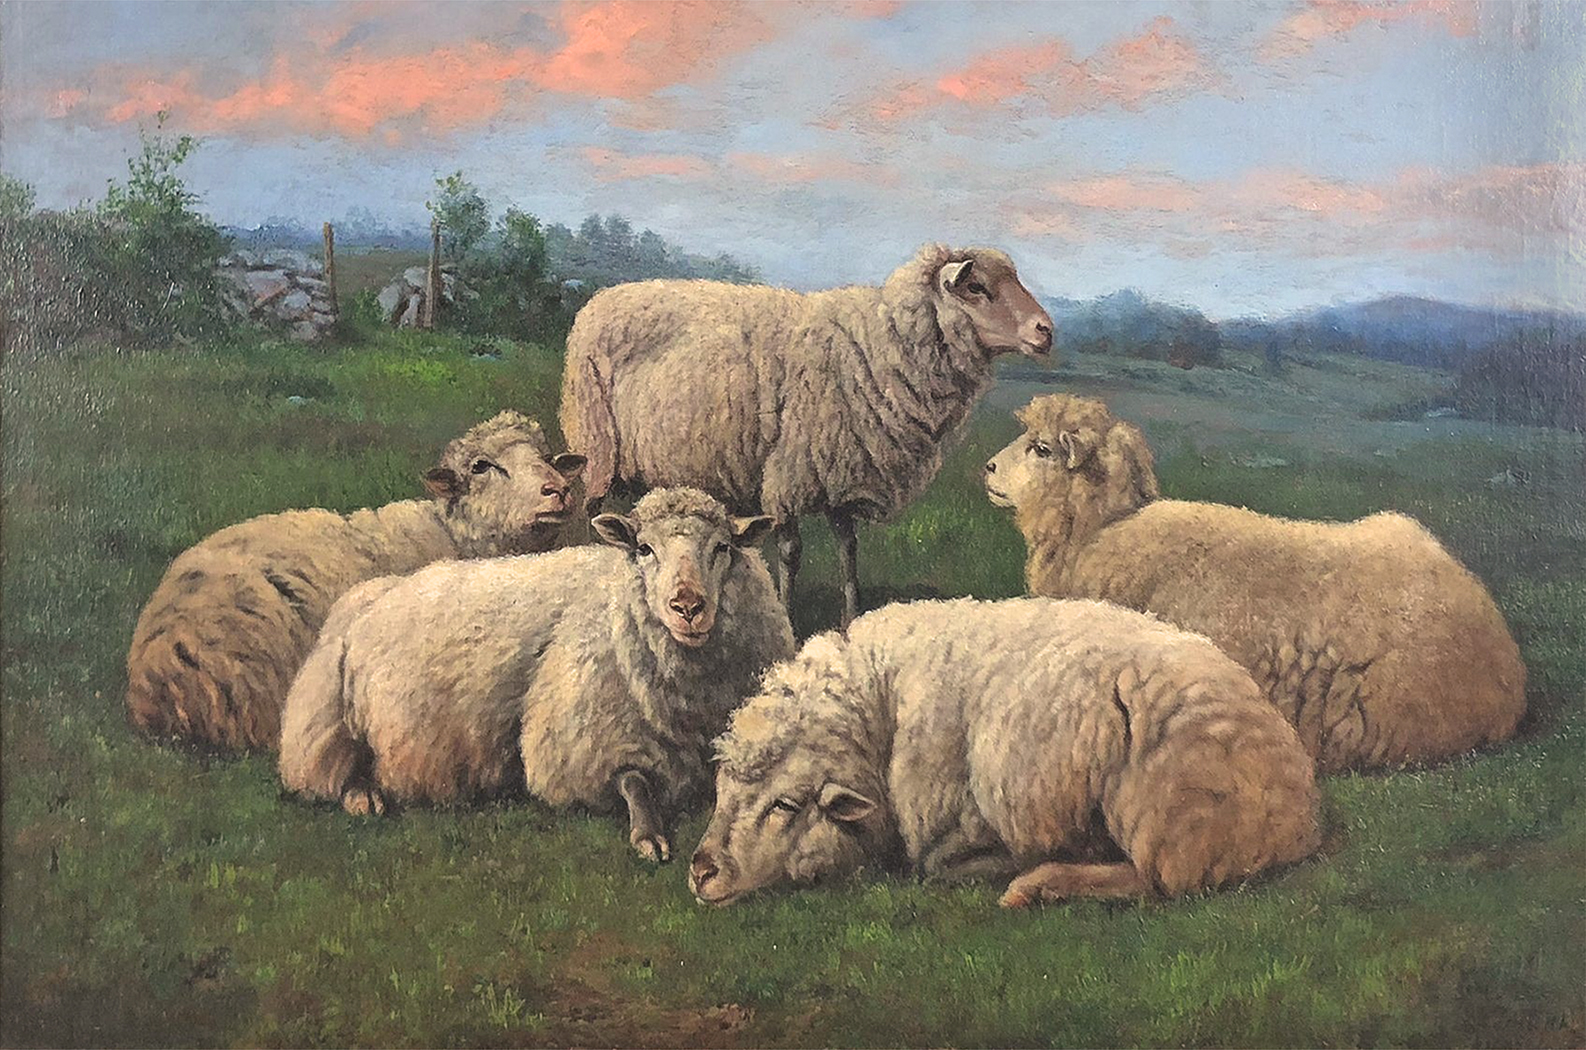 Farm/Pastoral Farm Sheep at Sunrise Framed Oil Painting Print on Canvas